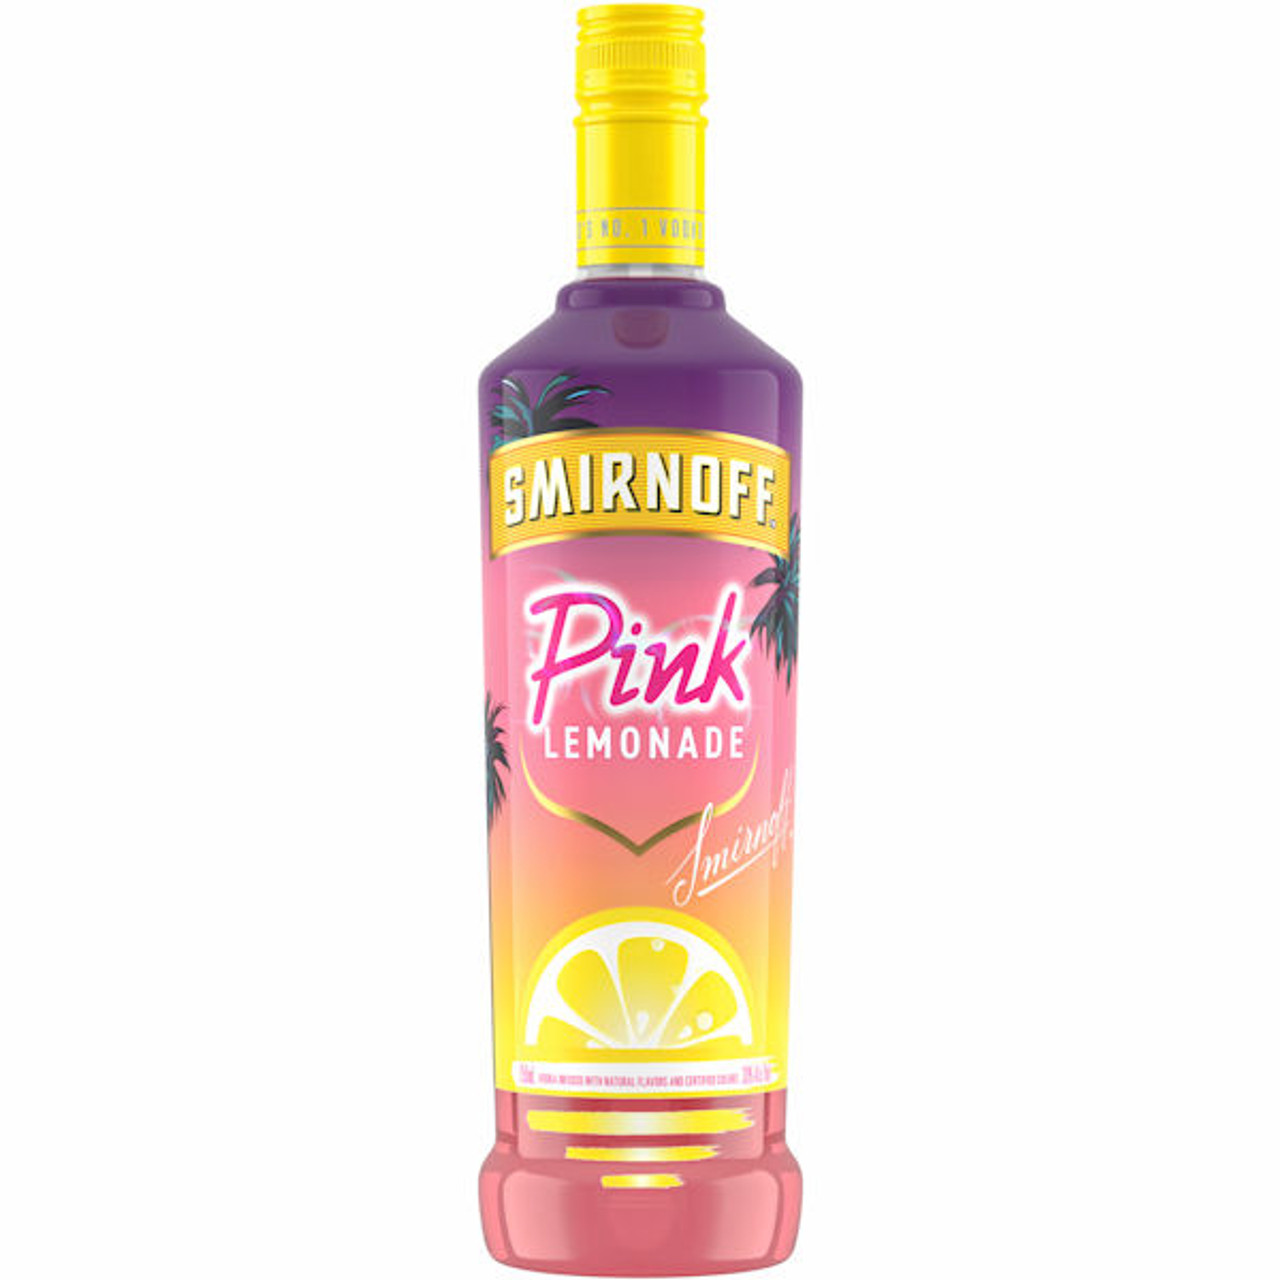 Smirnoff Pink Lemonade Vodka 750ml